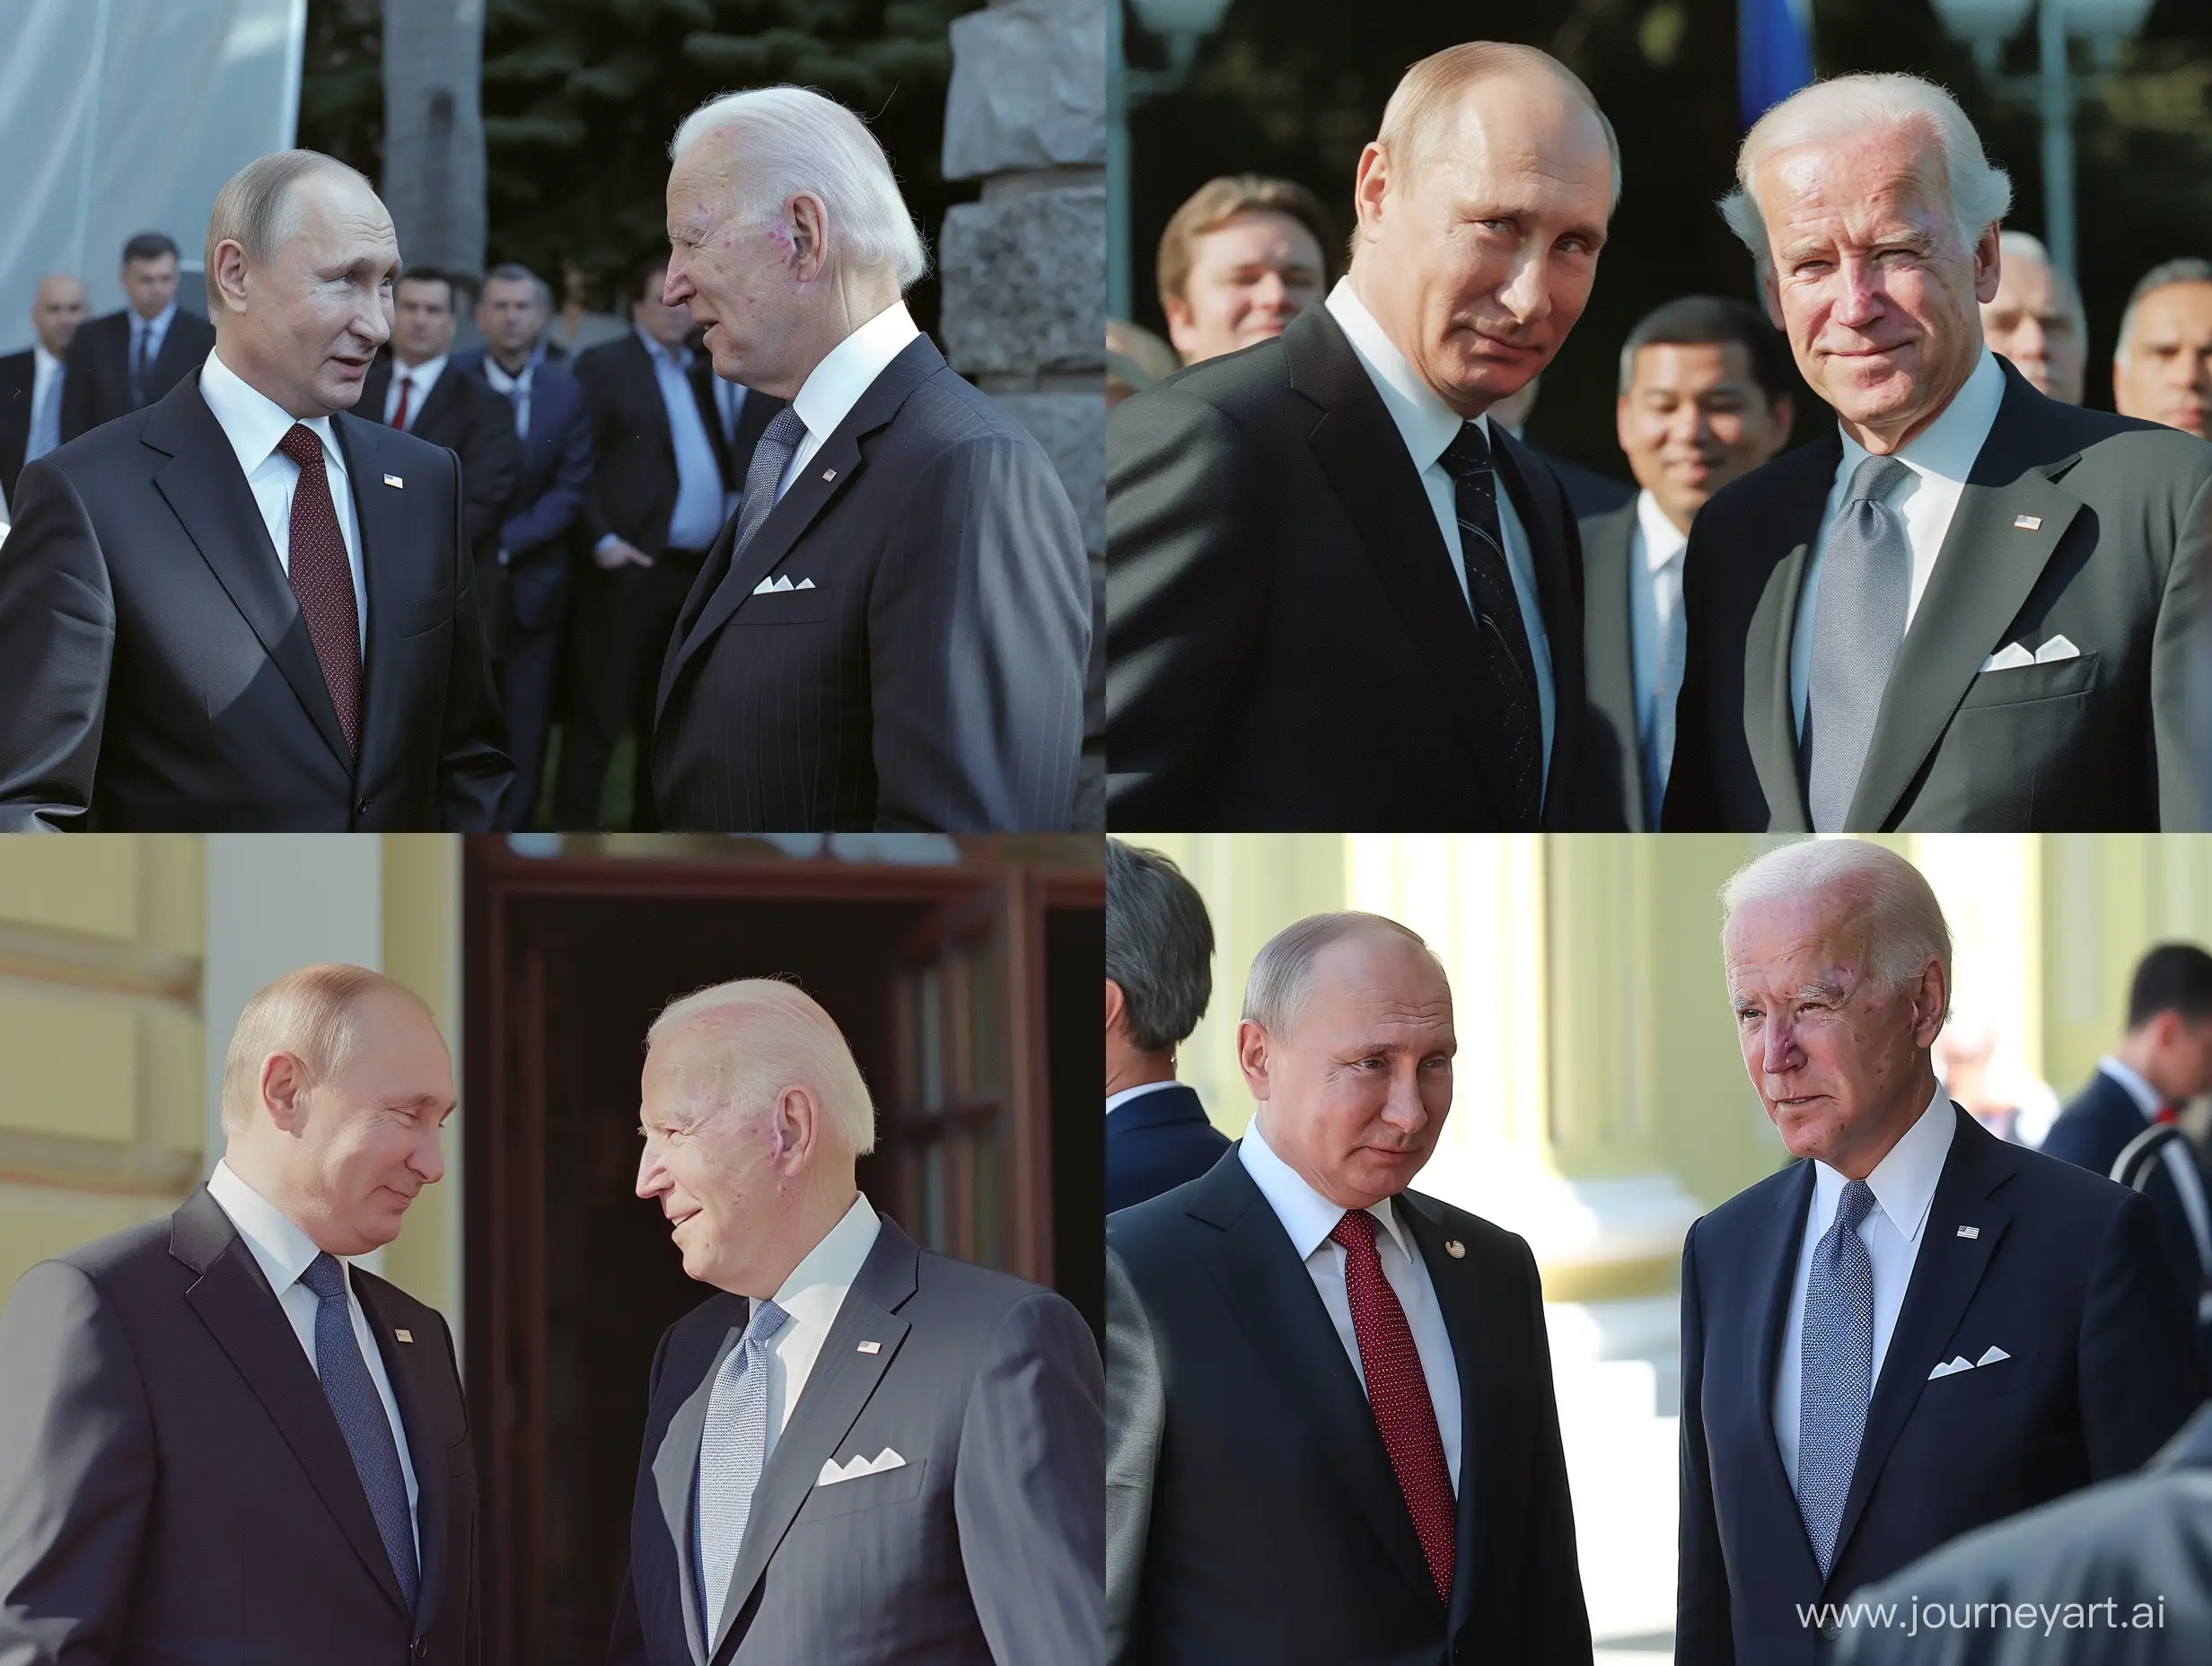 Vladimir-Putin-and-Joe-Biden-Diplomatic-Encounter-in-Kodak-Gold-200-Film